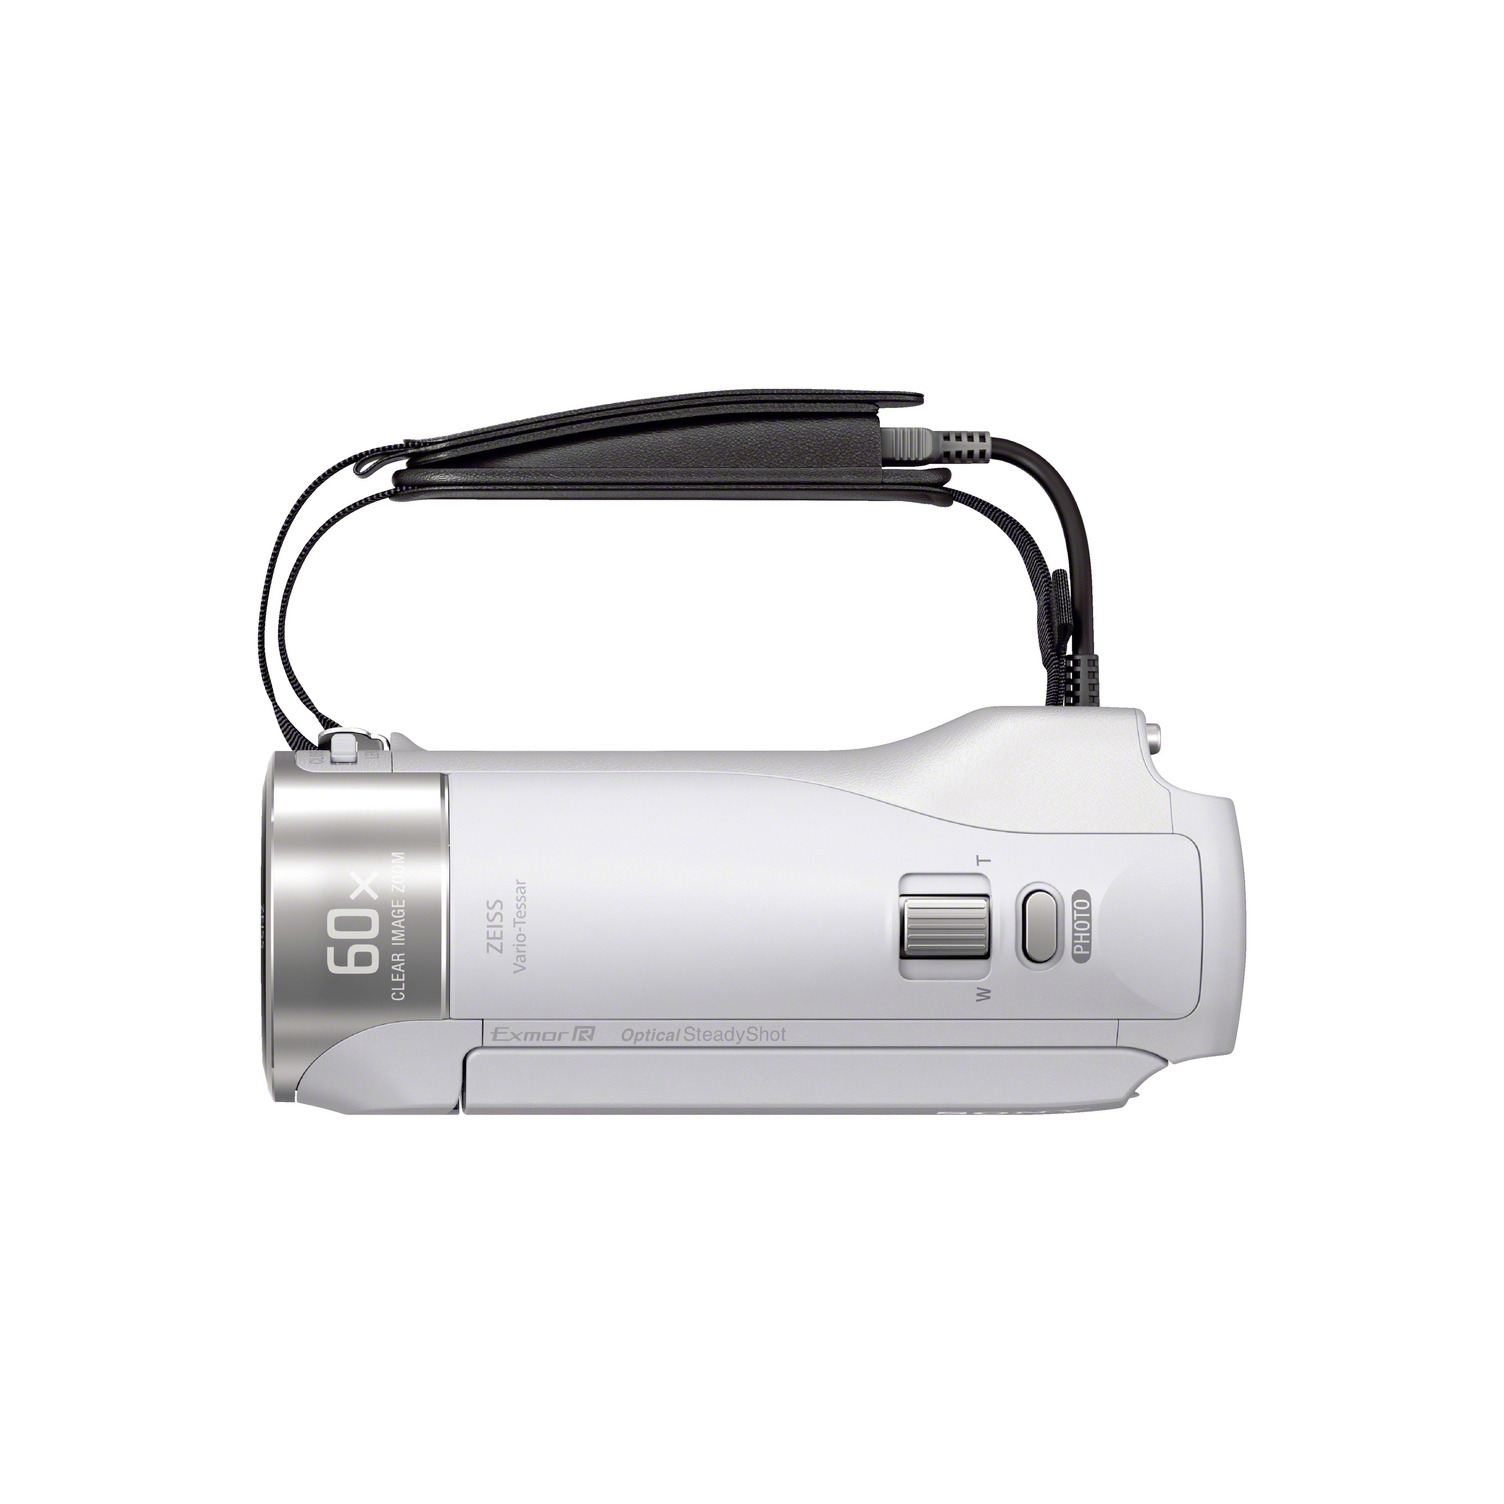 HDR-CX470 購入 | デジタルビデオカメラ ハンディカム | ソニー